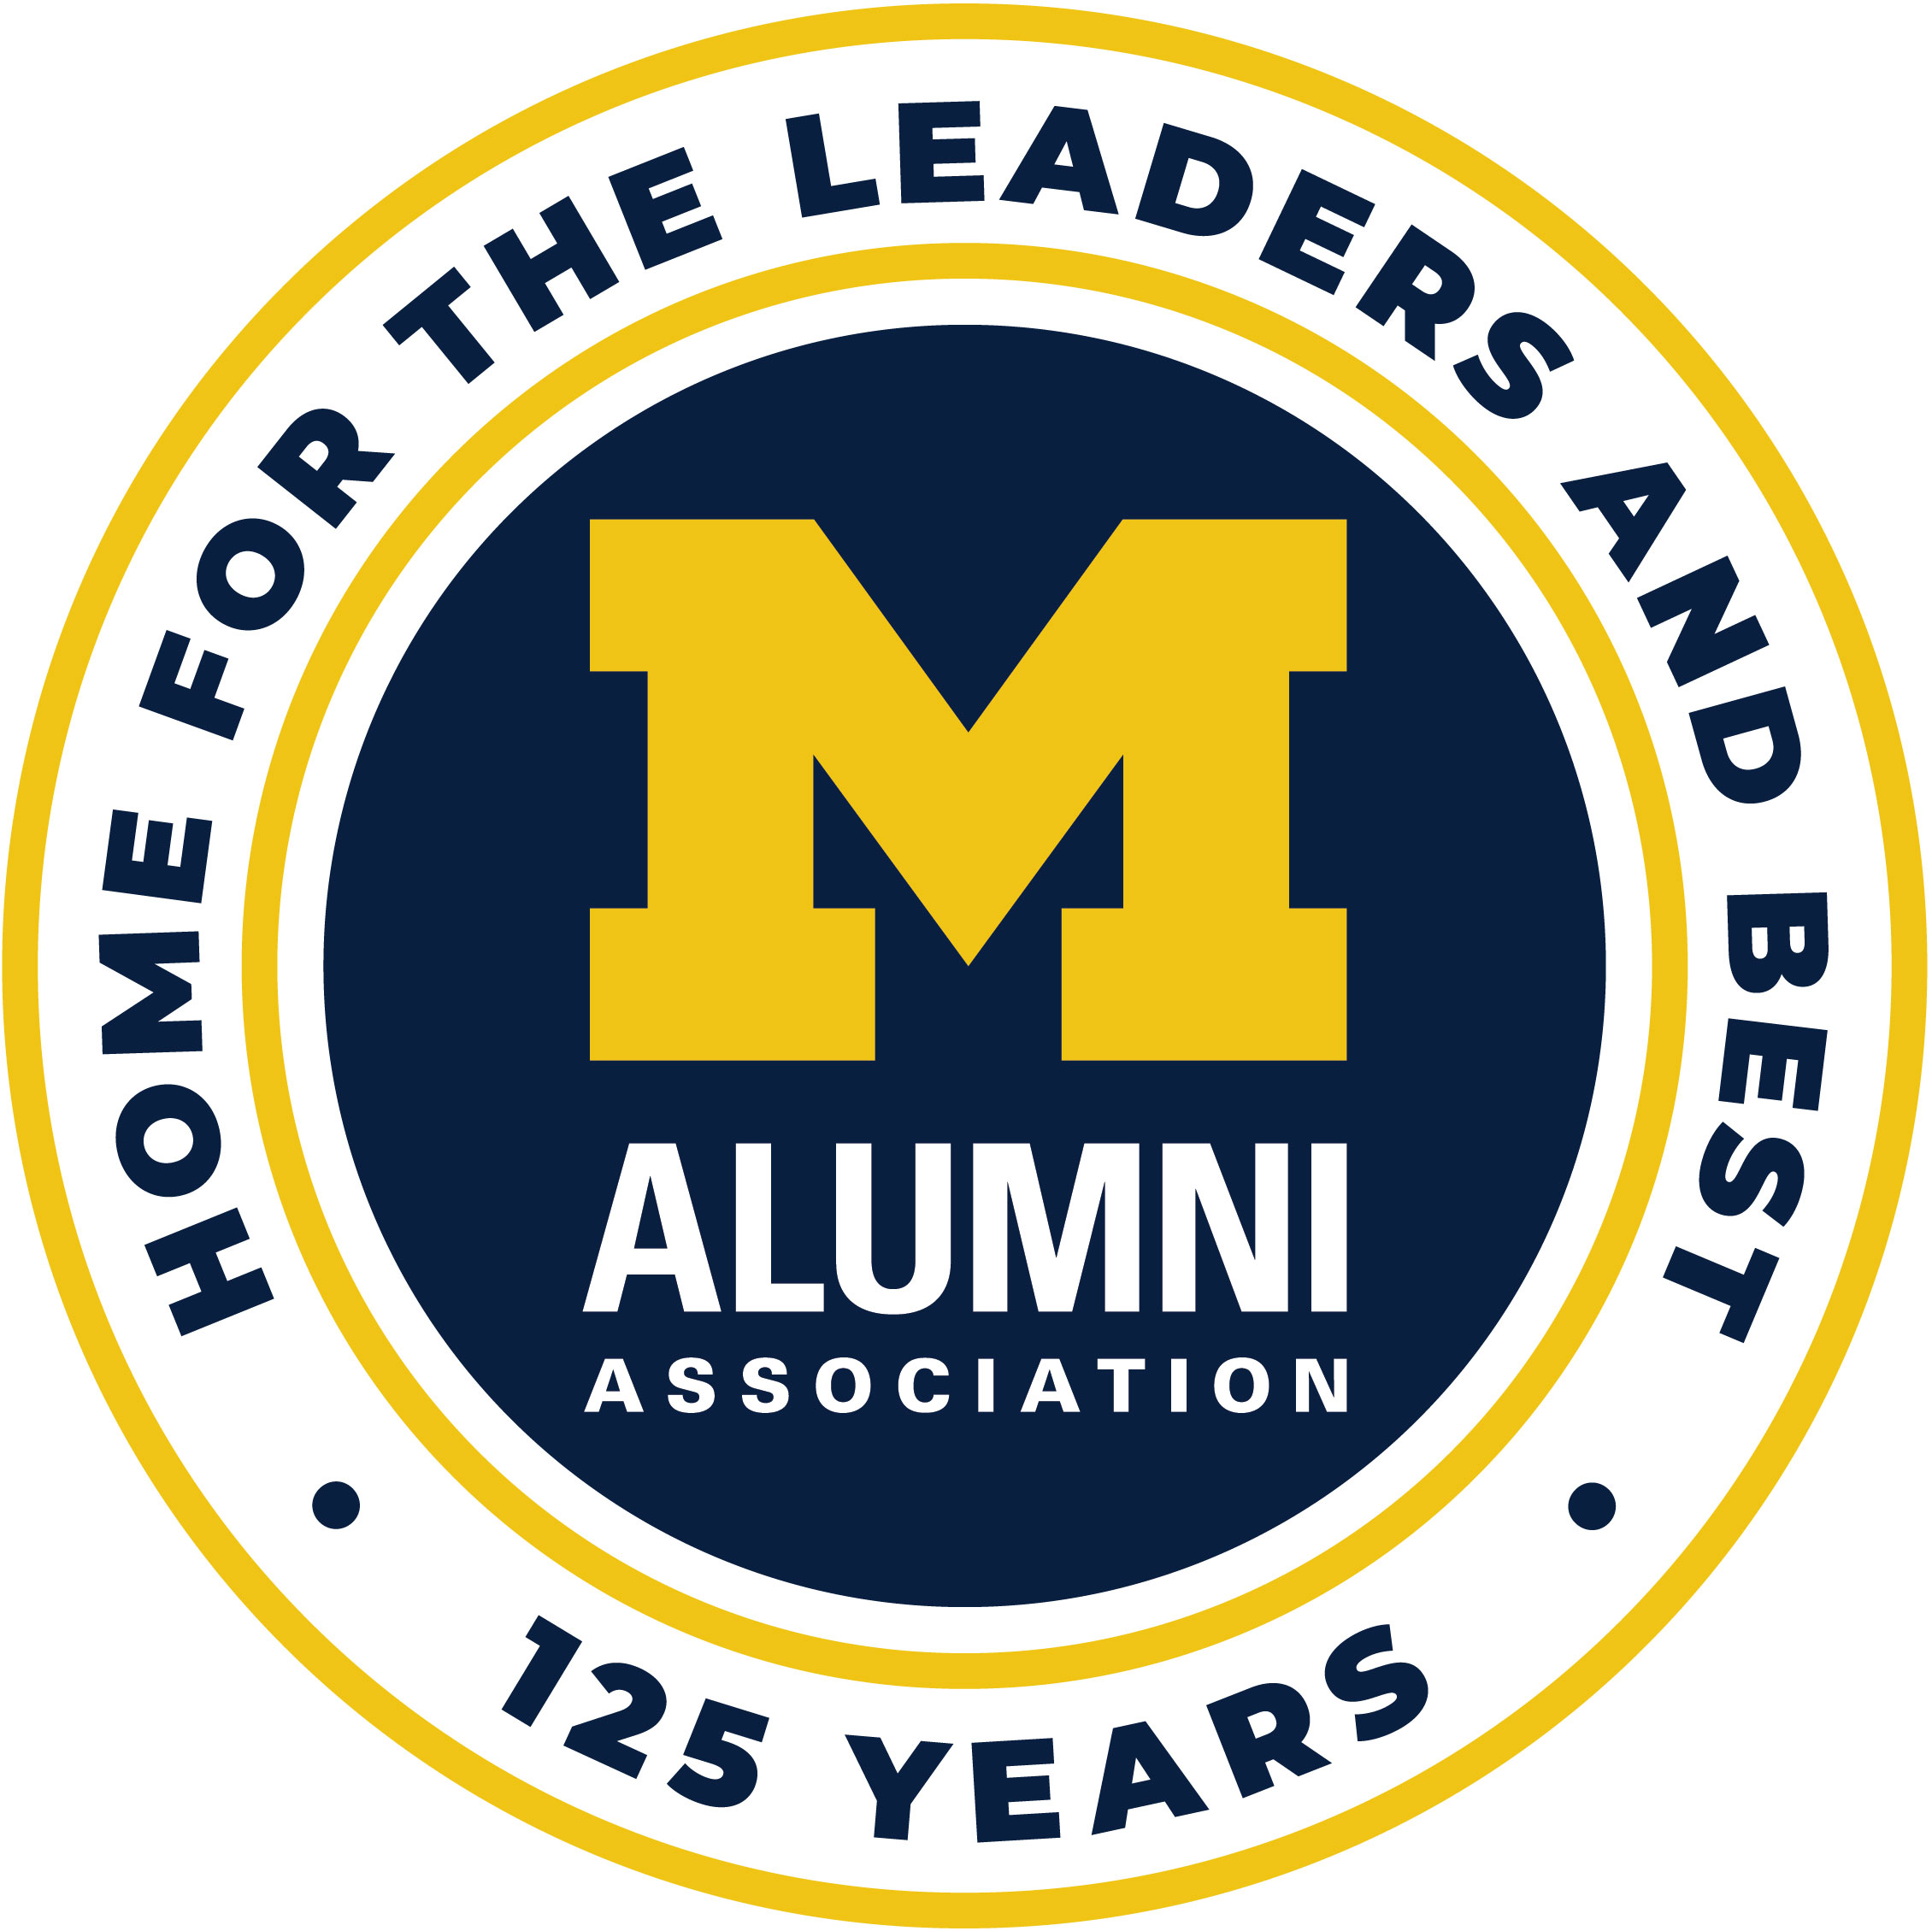 125 Years of the Alumni Association logo